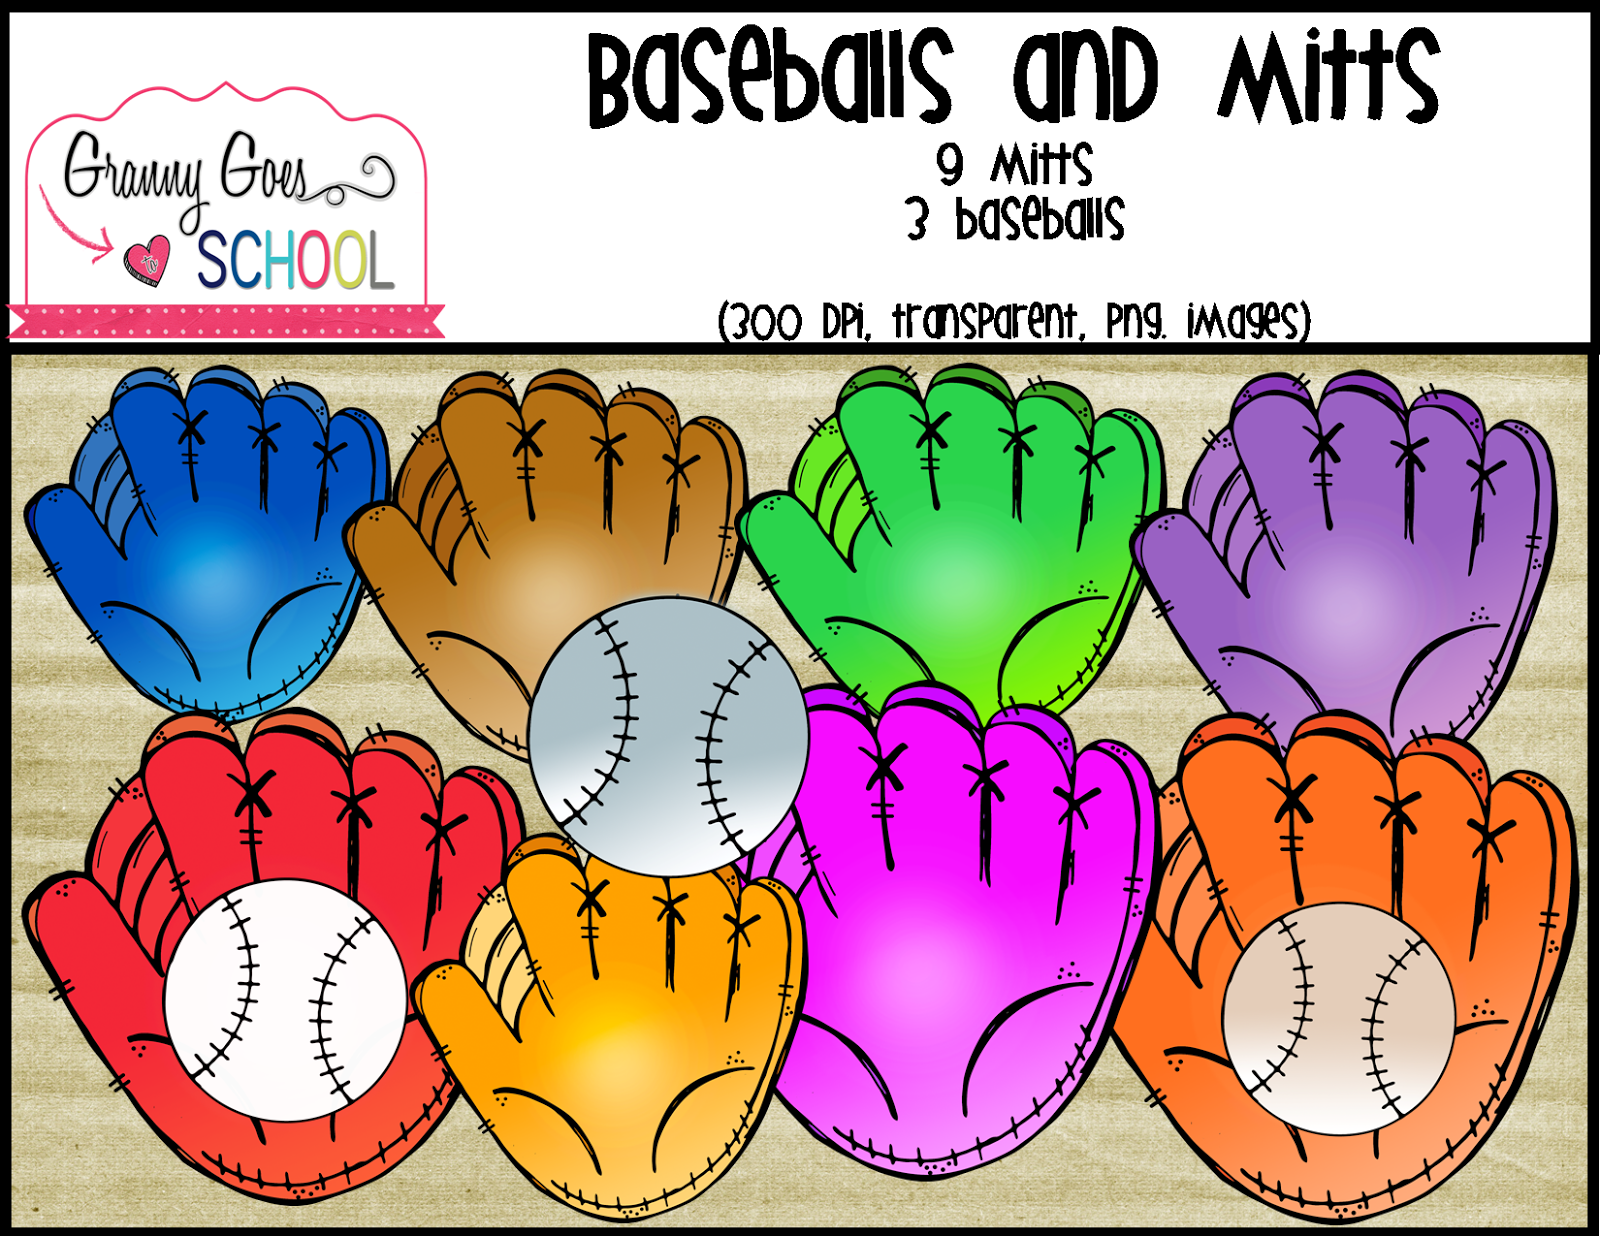 http://www.teacherspayteachers.com/Product/Baseballs-and-Mitts-Clip-Art-1499099